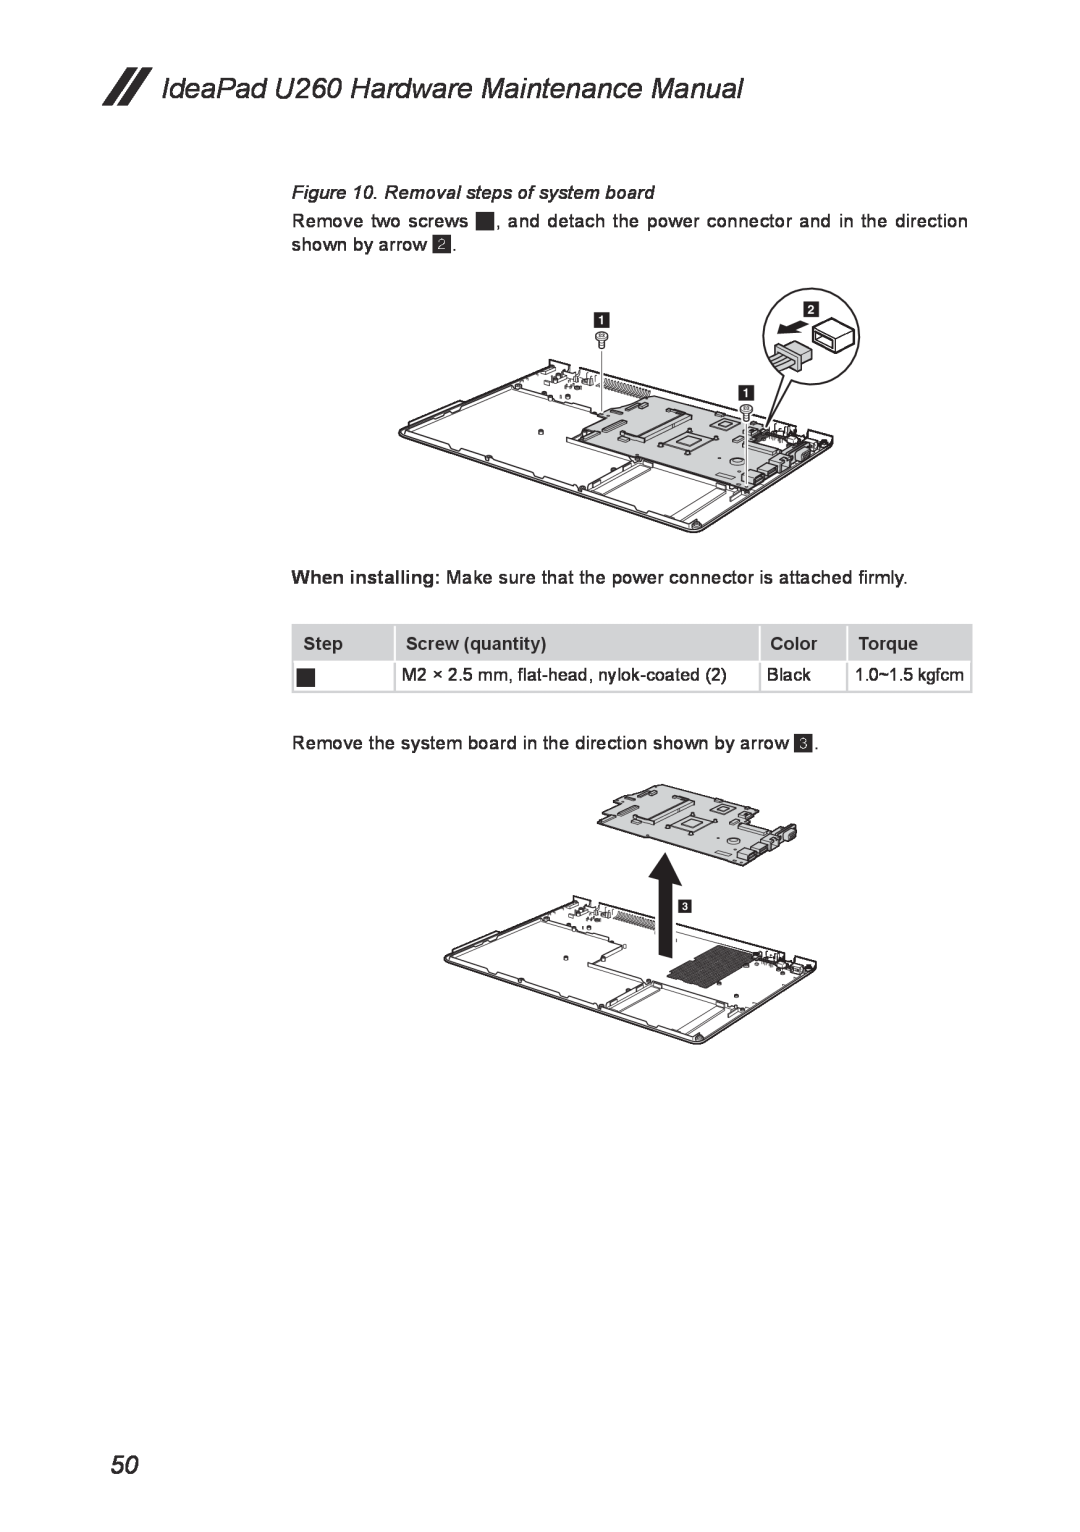 Lenovo Removal steps of system board, IdeaPad U260 Hardware Maintenance Manual, Step, Screw quantity, Color, Torque 